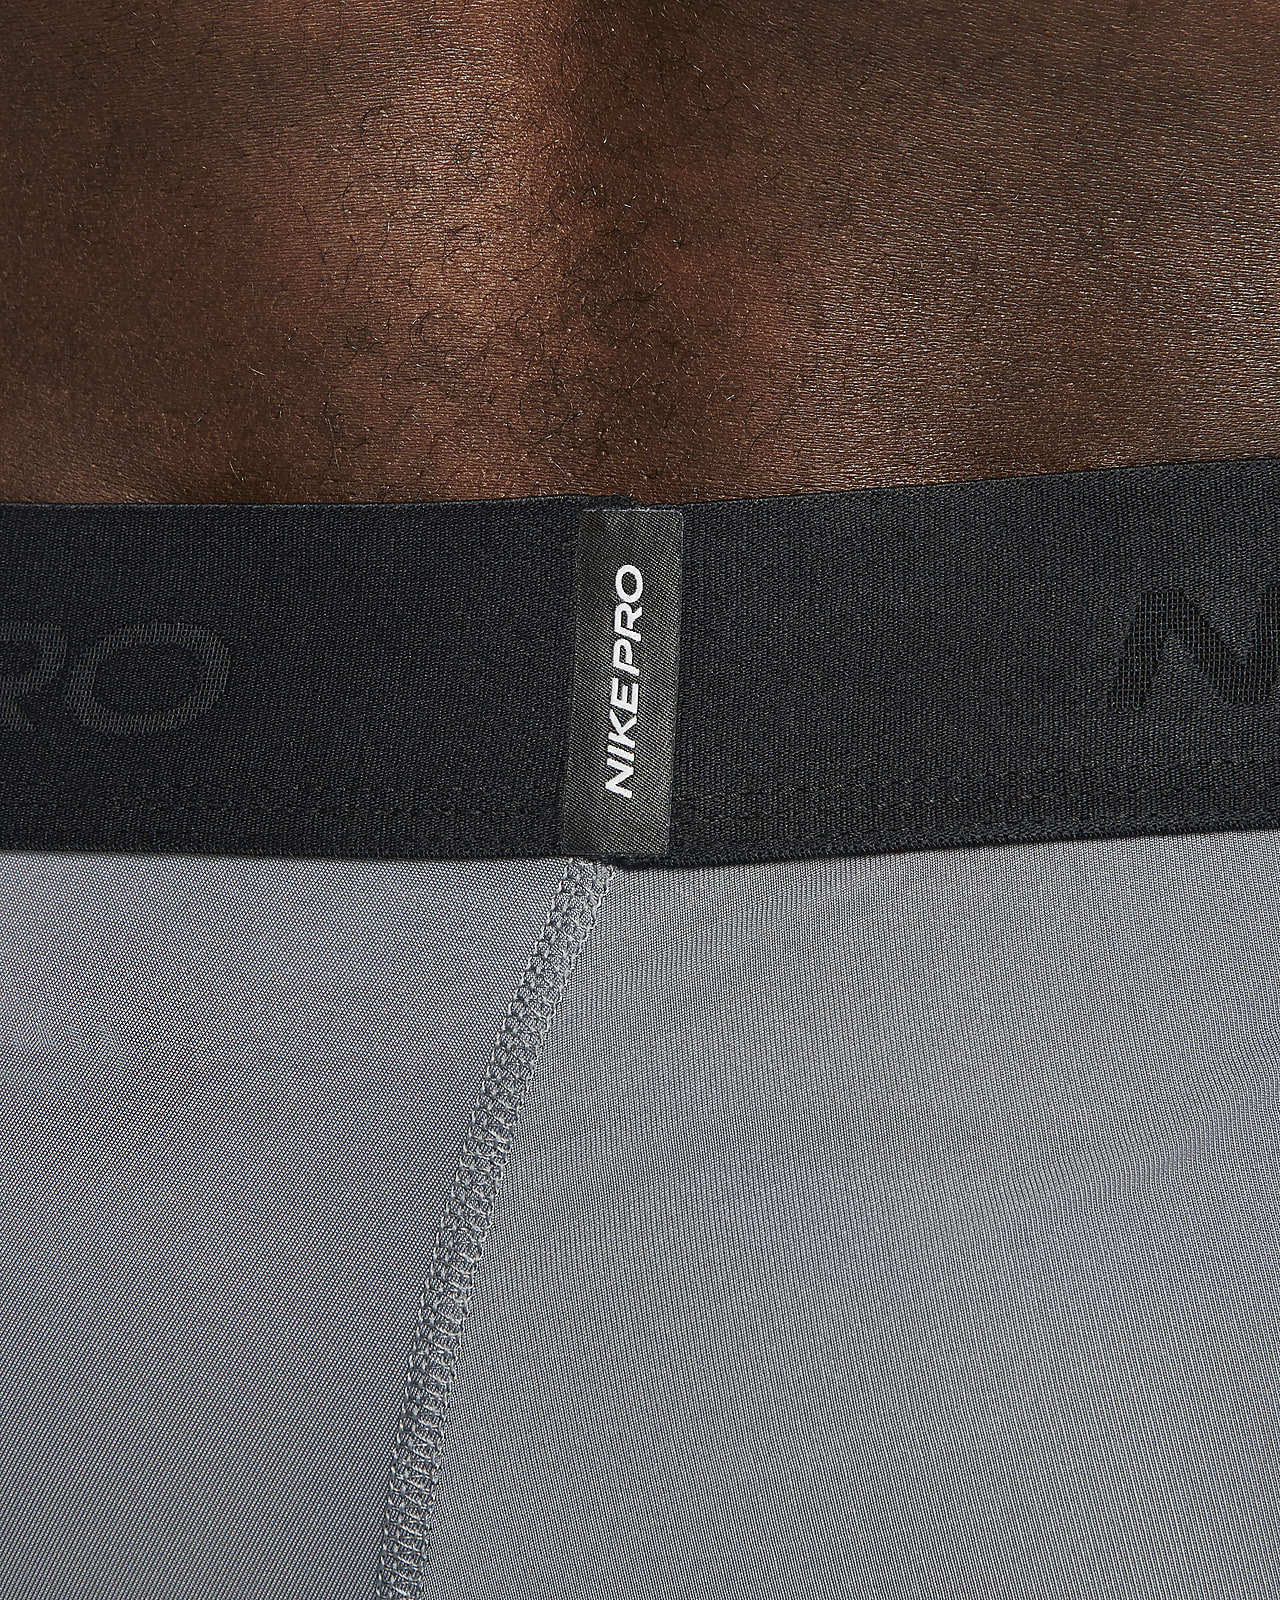 Men Nike Pro DRI-FIT 3/4 Length Tights Size L Large Grey Gray